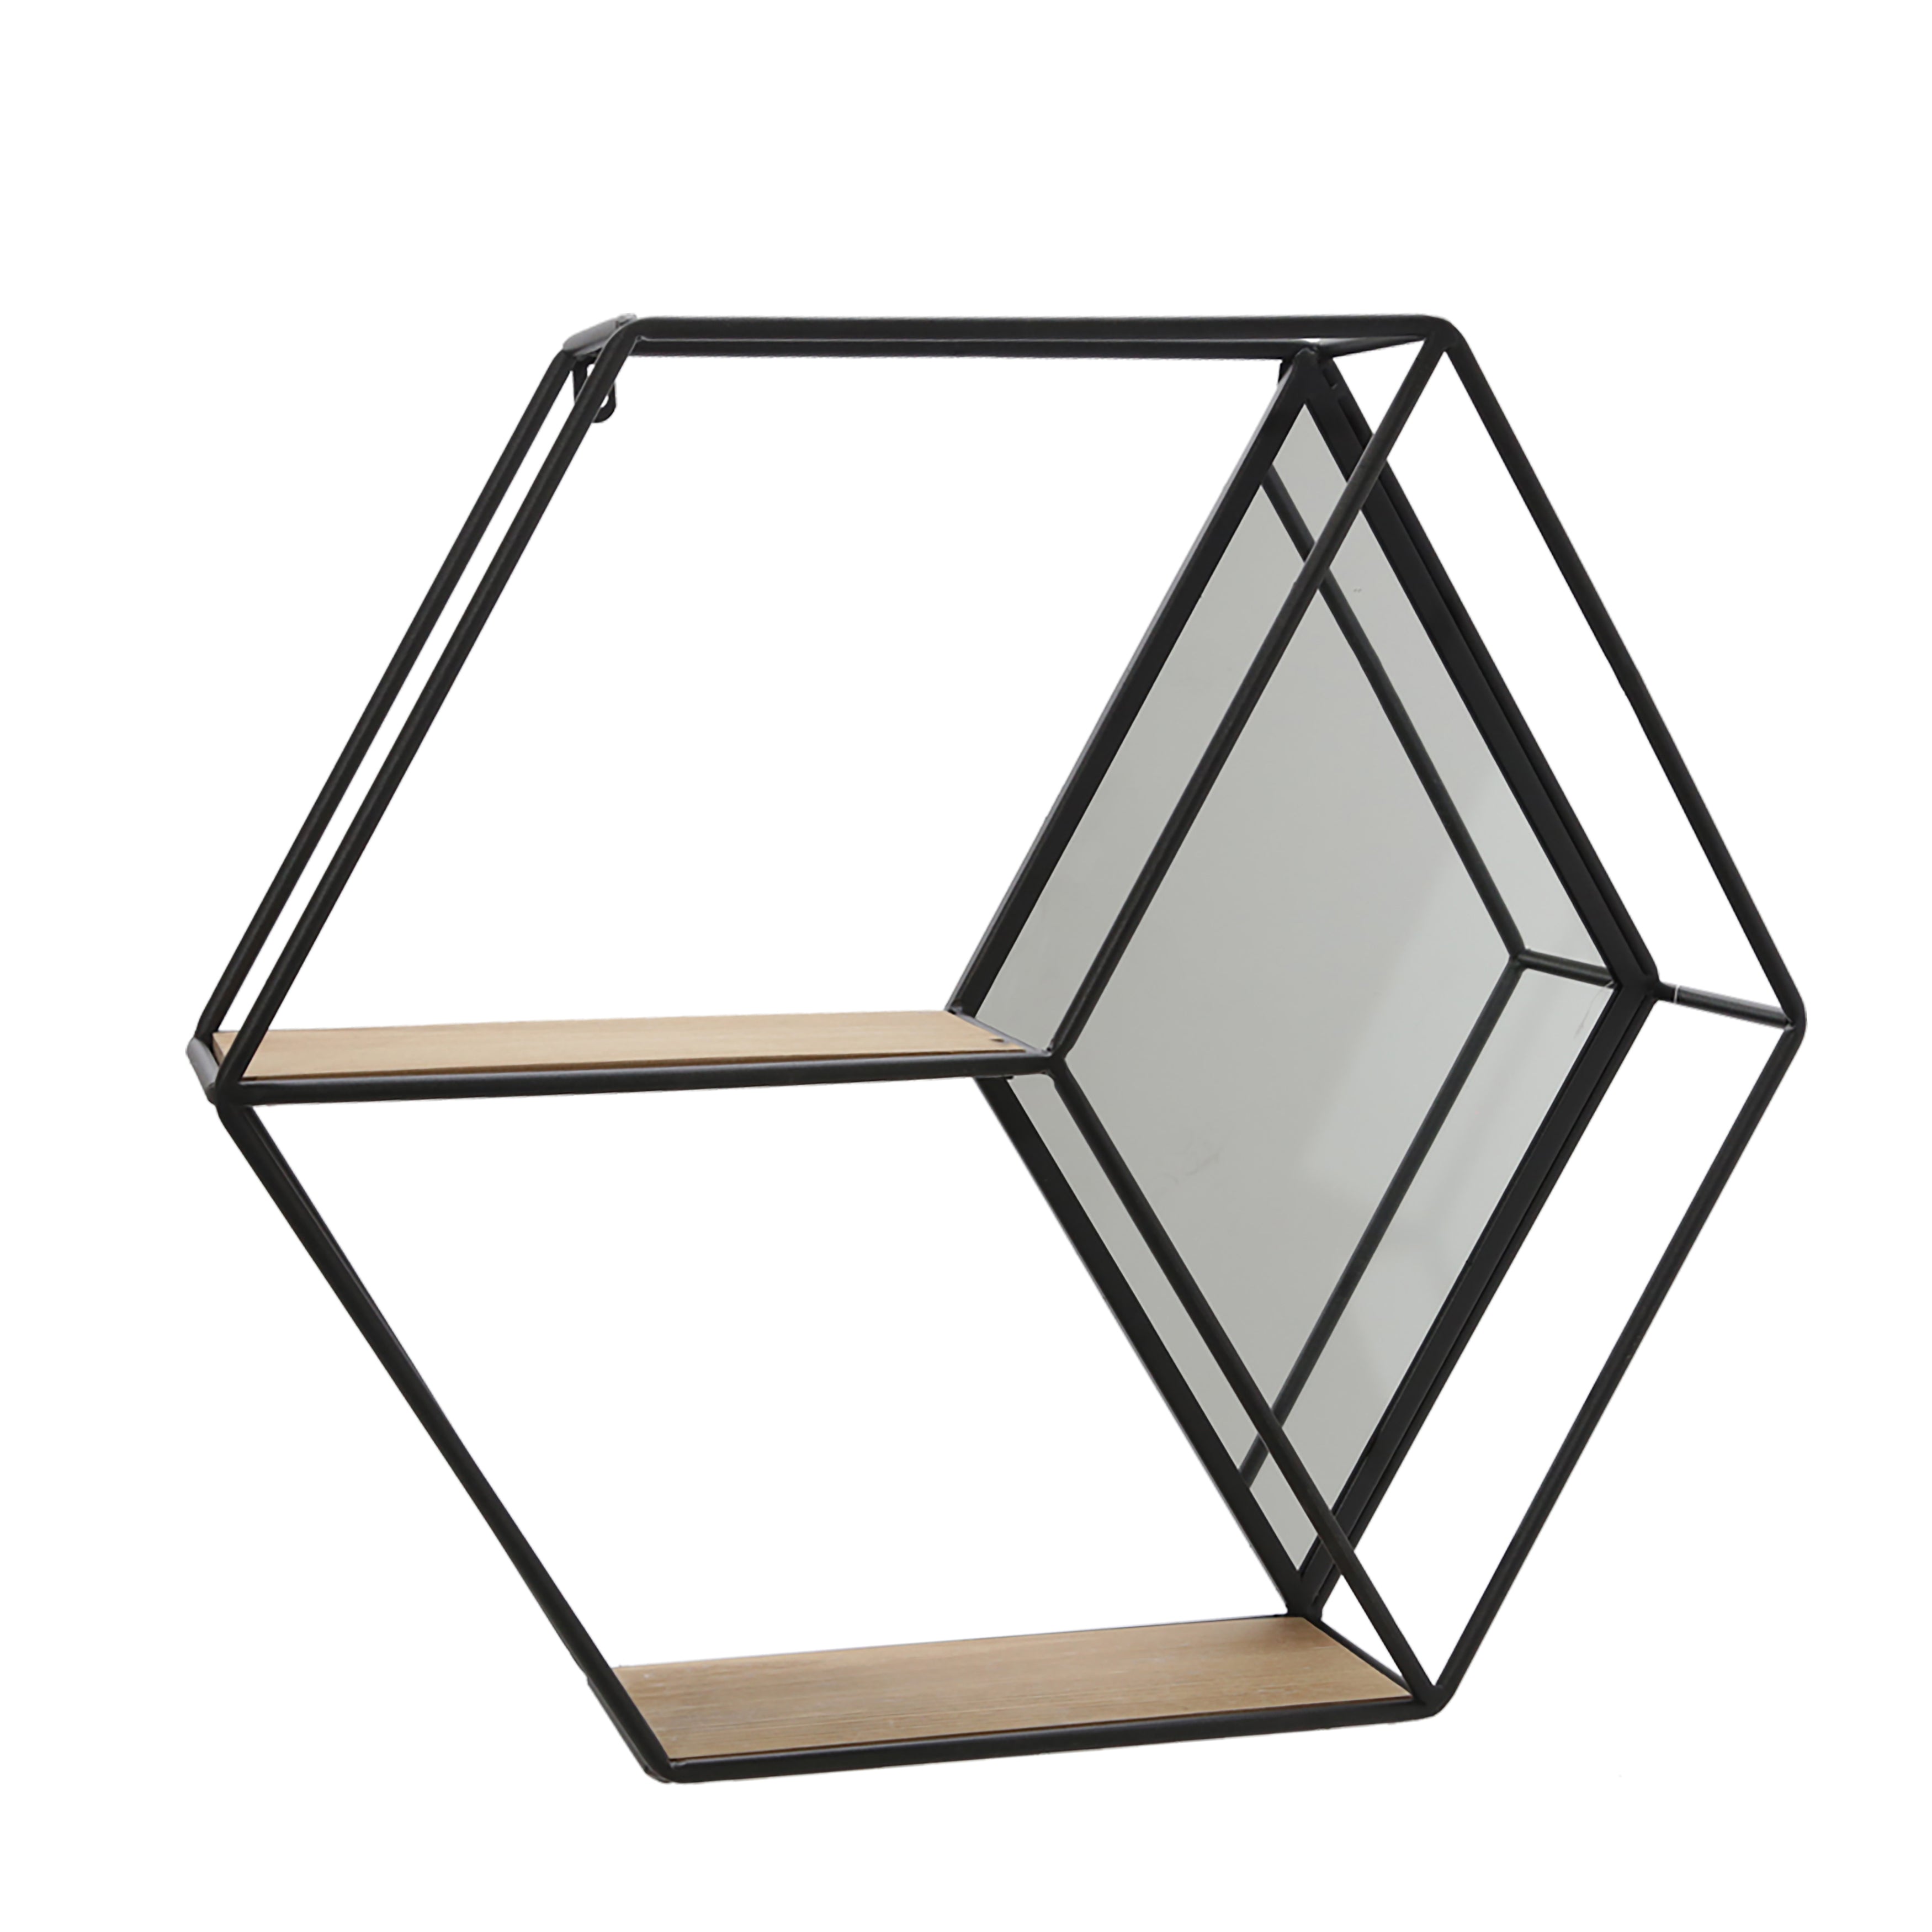 20" Hexagon Mirrored Wall Shelf, Black, Wall Storage